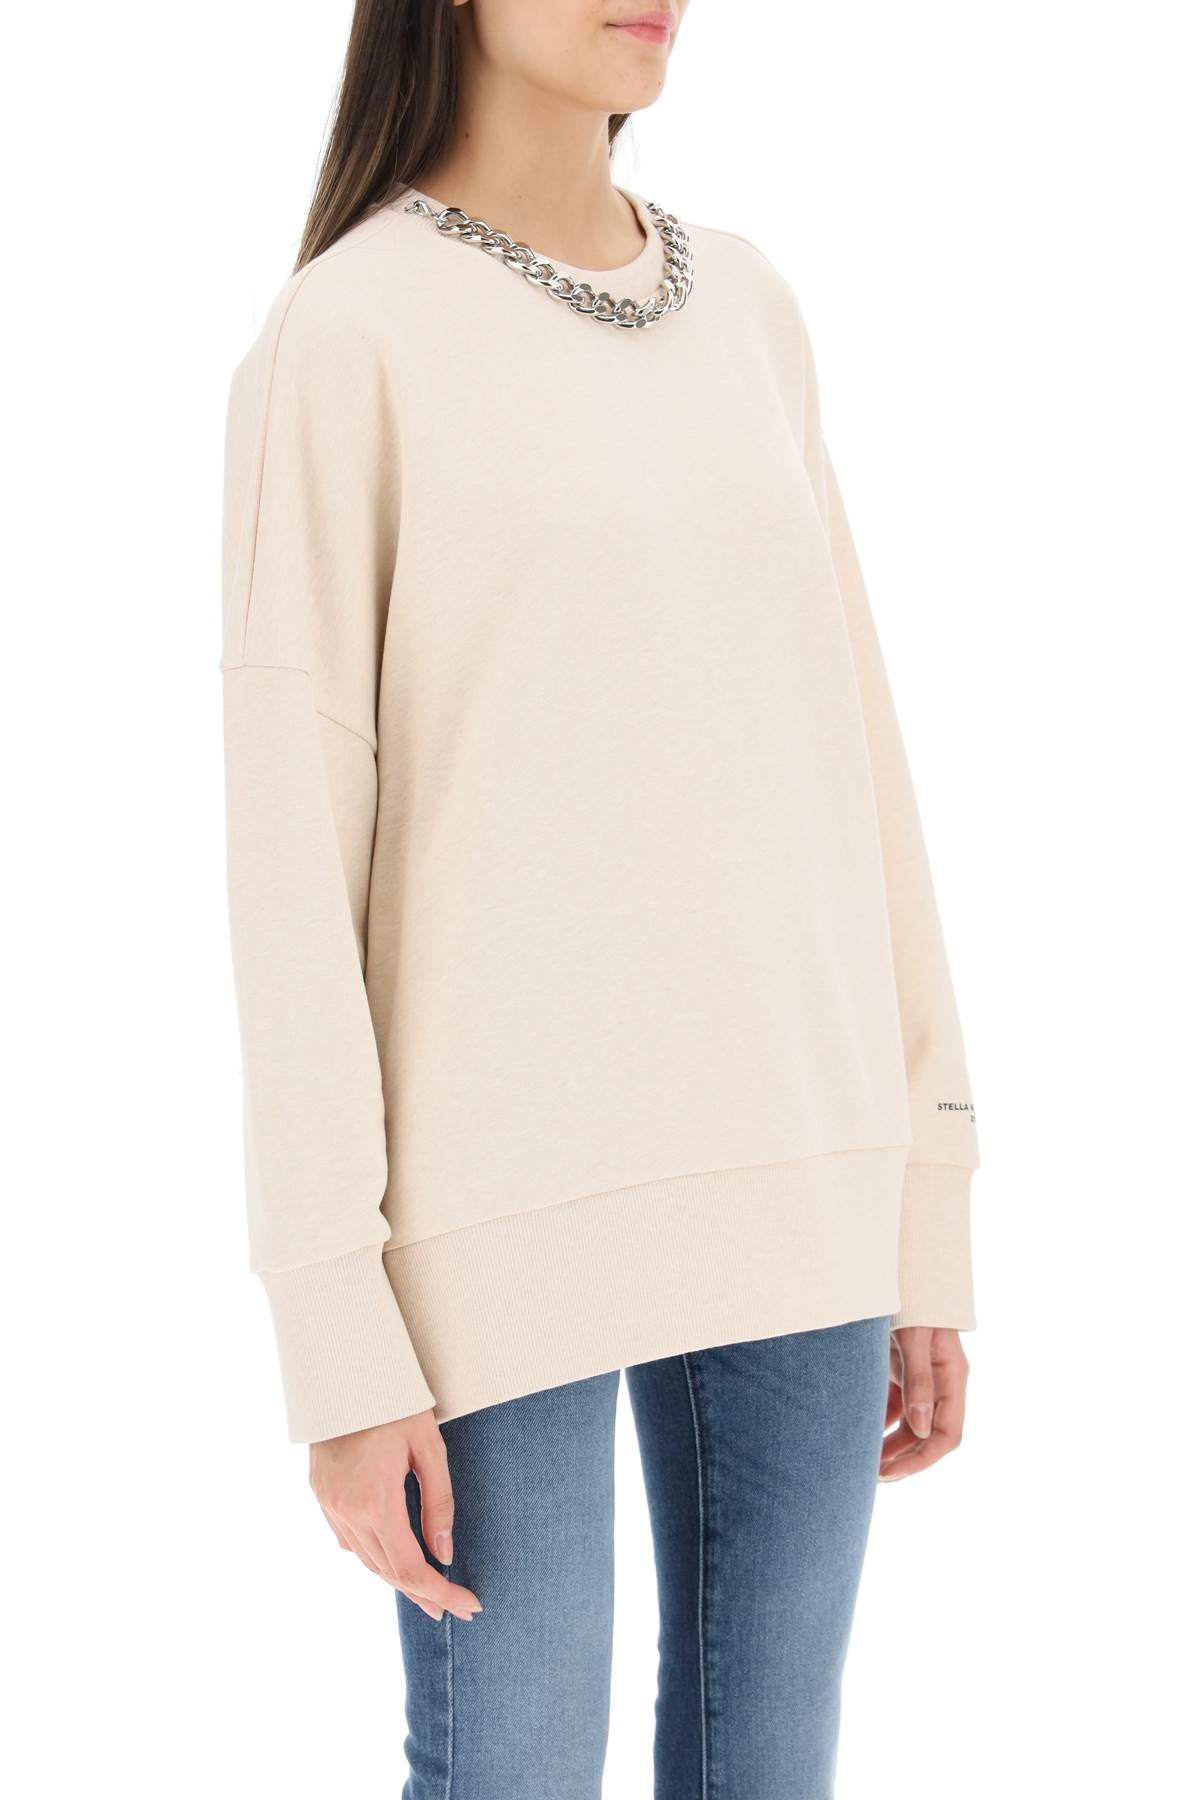 Stella mccartney 'falabella' sweater-1